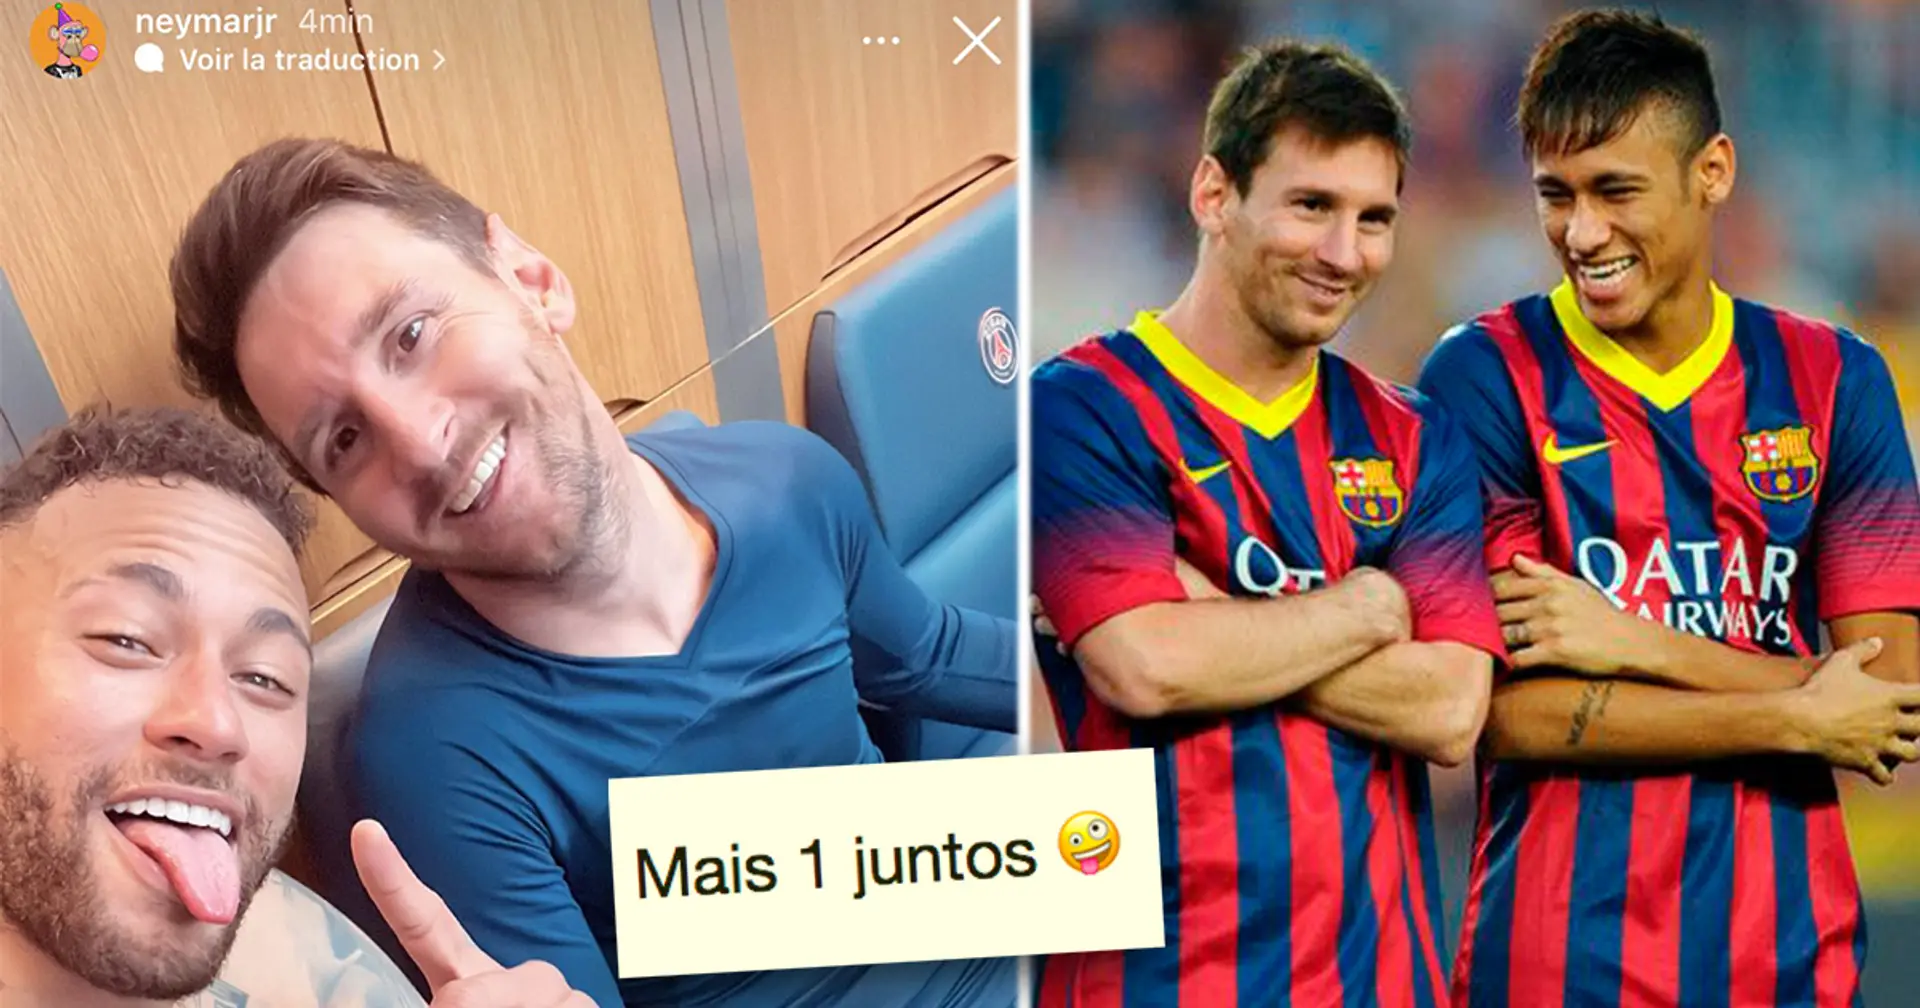 Neymar reacts to winning Ligue 1 alongside Messi with heartwarming caption